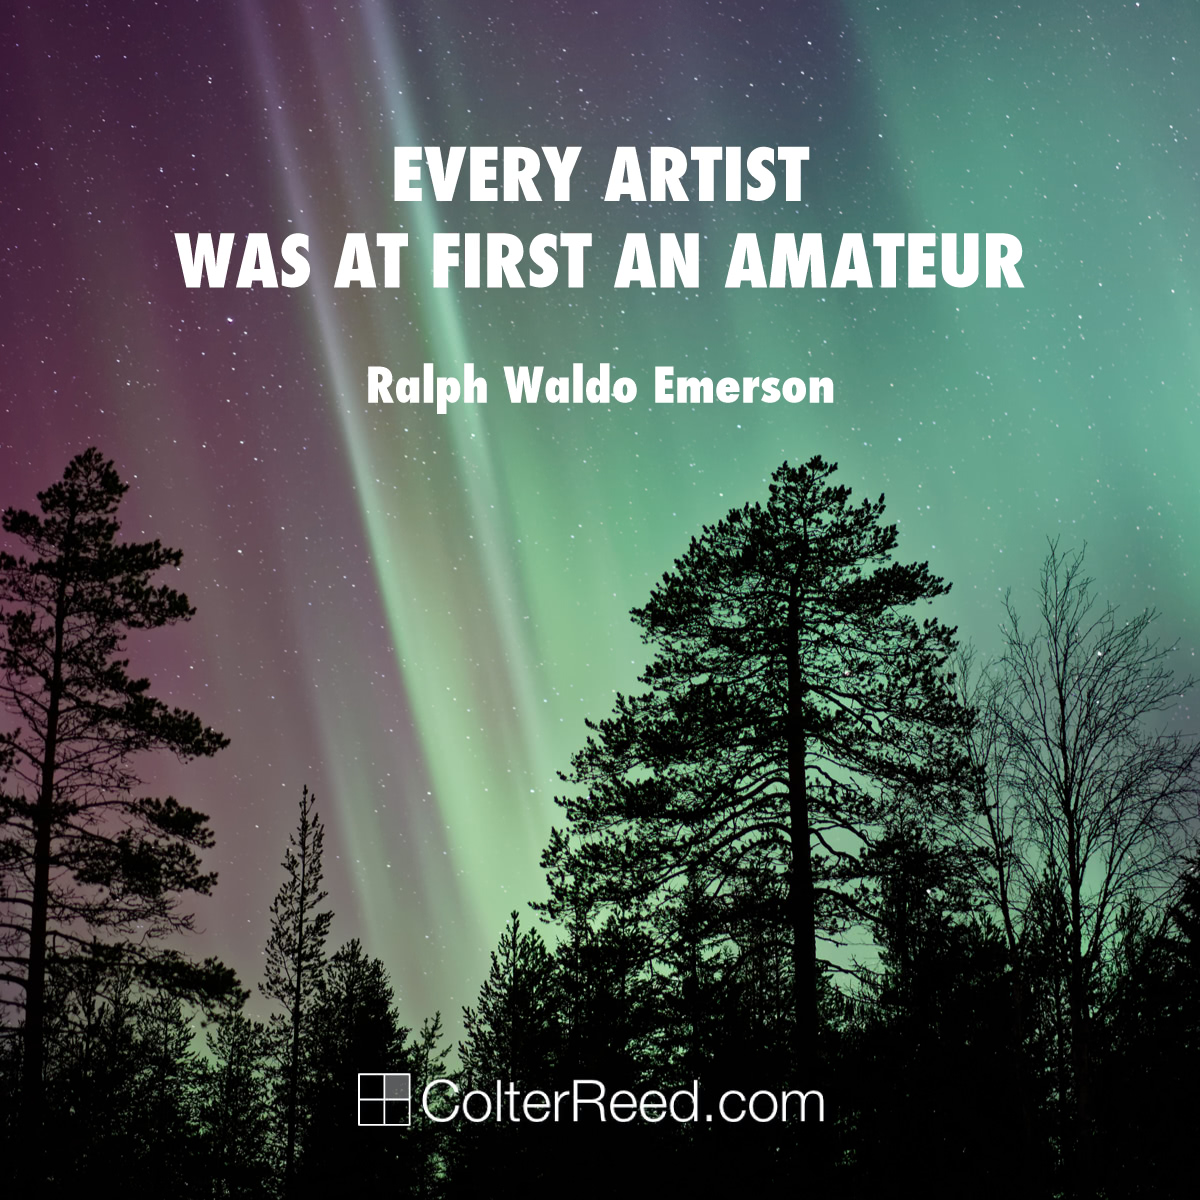 “Every artist was at first an amateur.” —Ralph Waldo Emerson